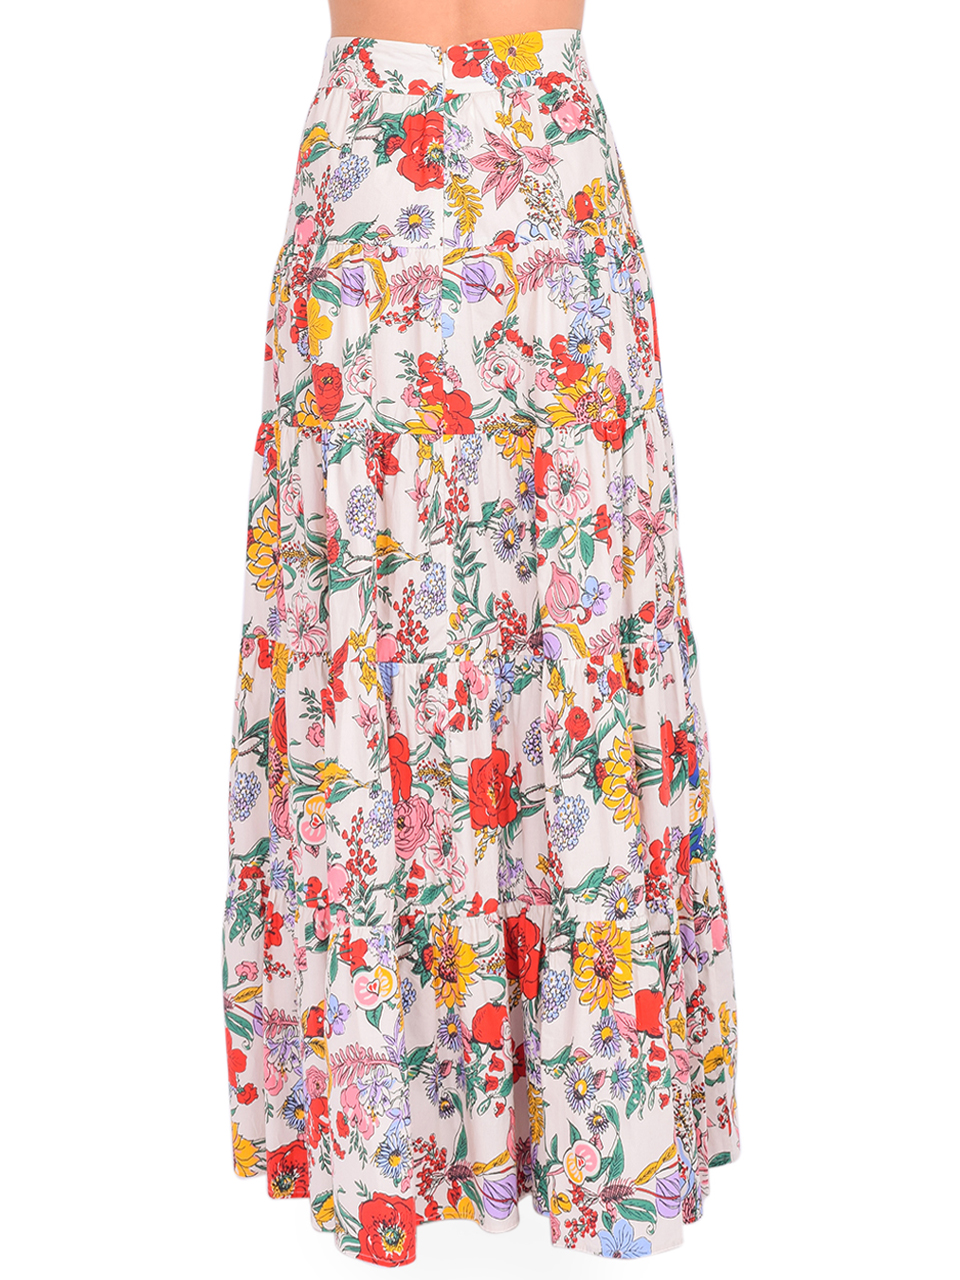 CARA CARA Nathali Skirt in Multi Flower Print Back View 